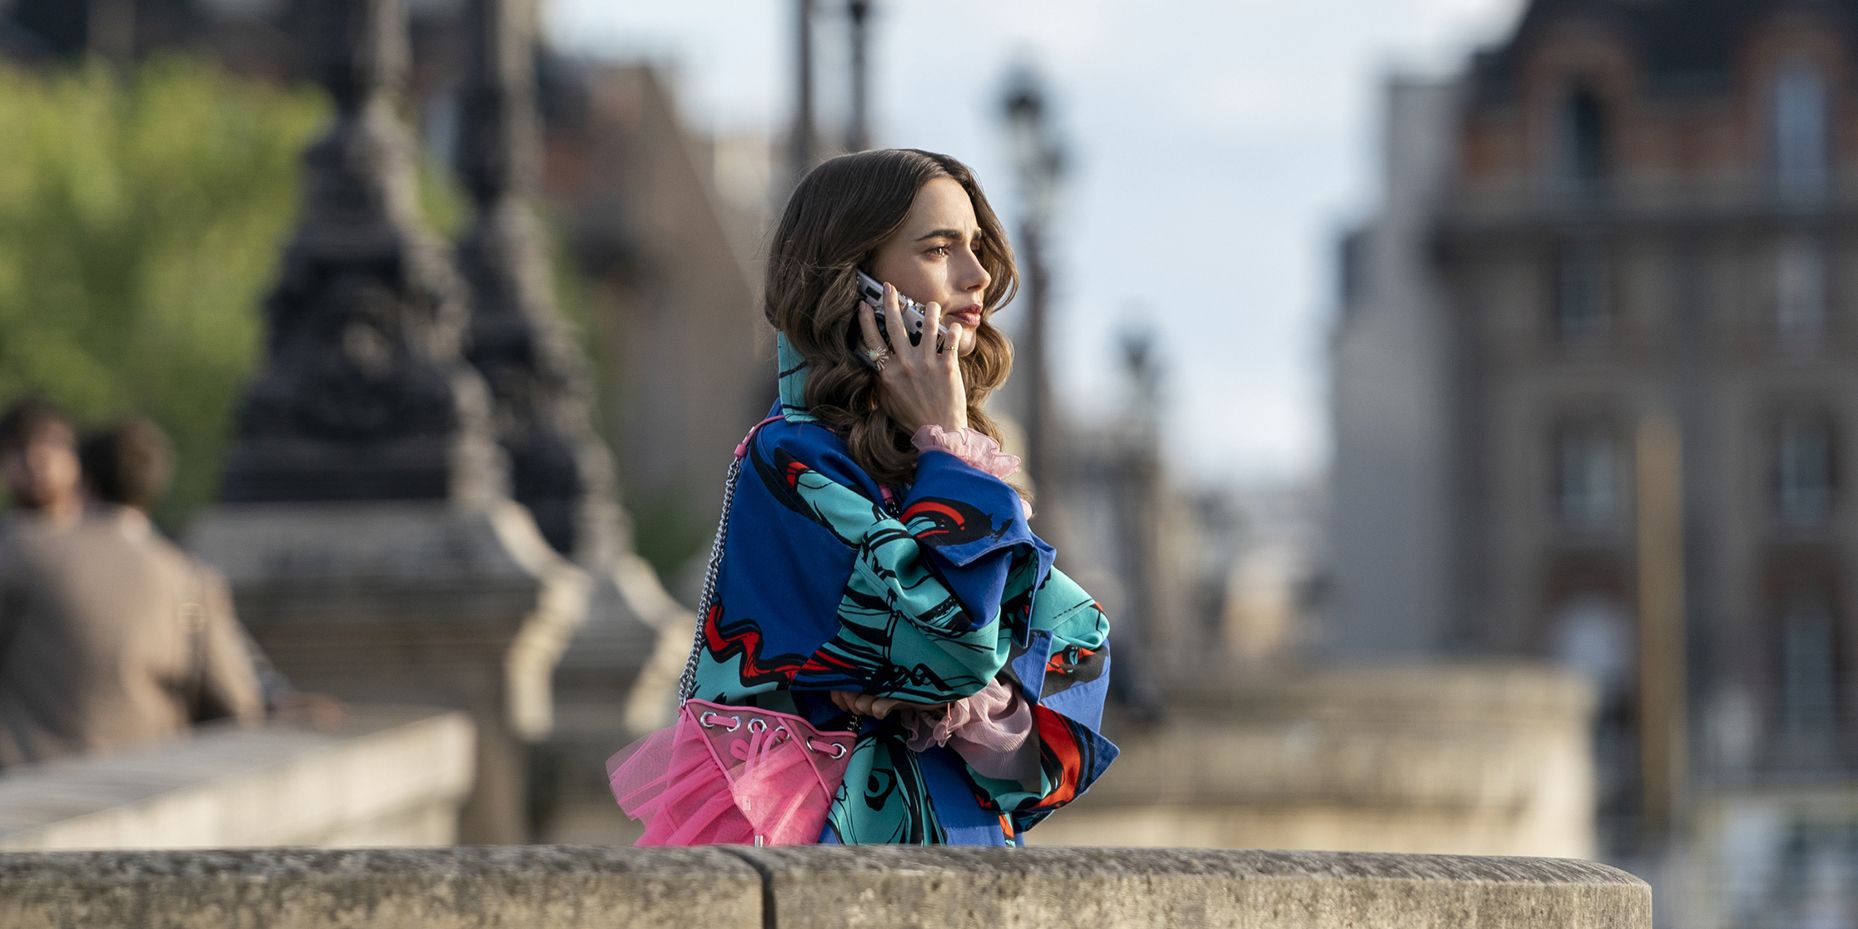 Emily in Paris' Season 2: Everything We Know So Far